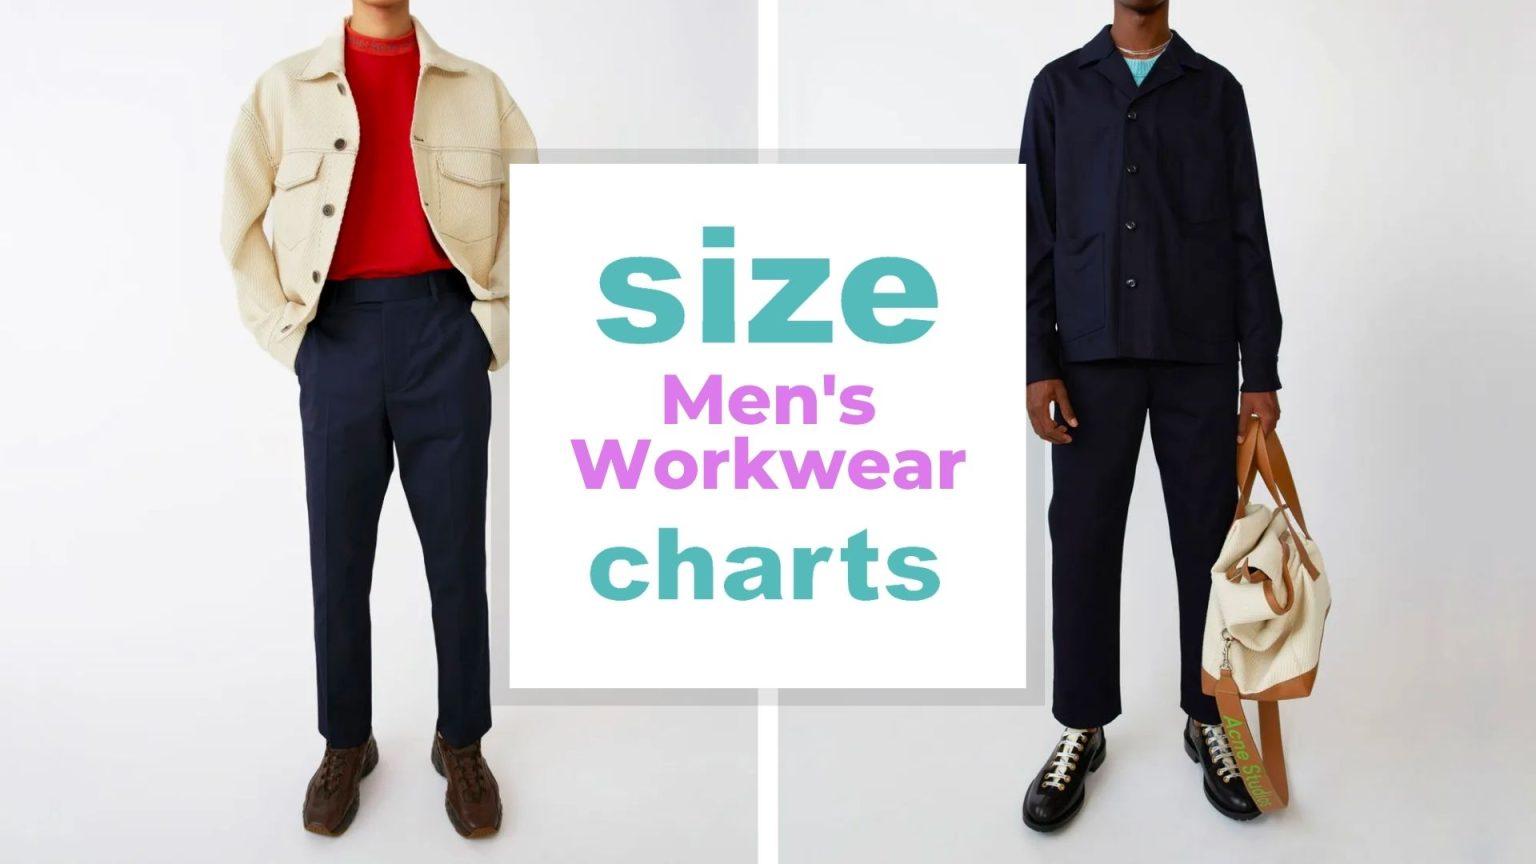 Men's Workwear Size Chart - Size-Charts.com - When size matters